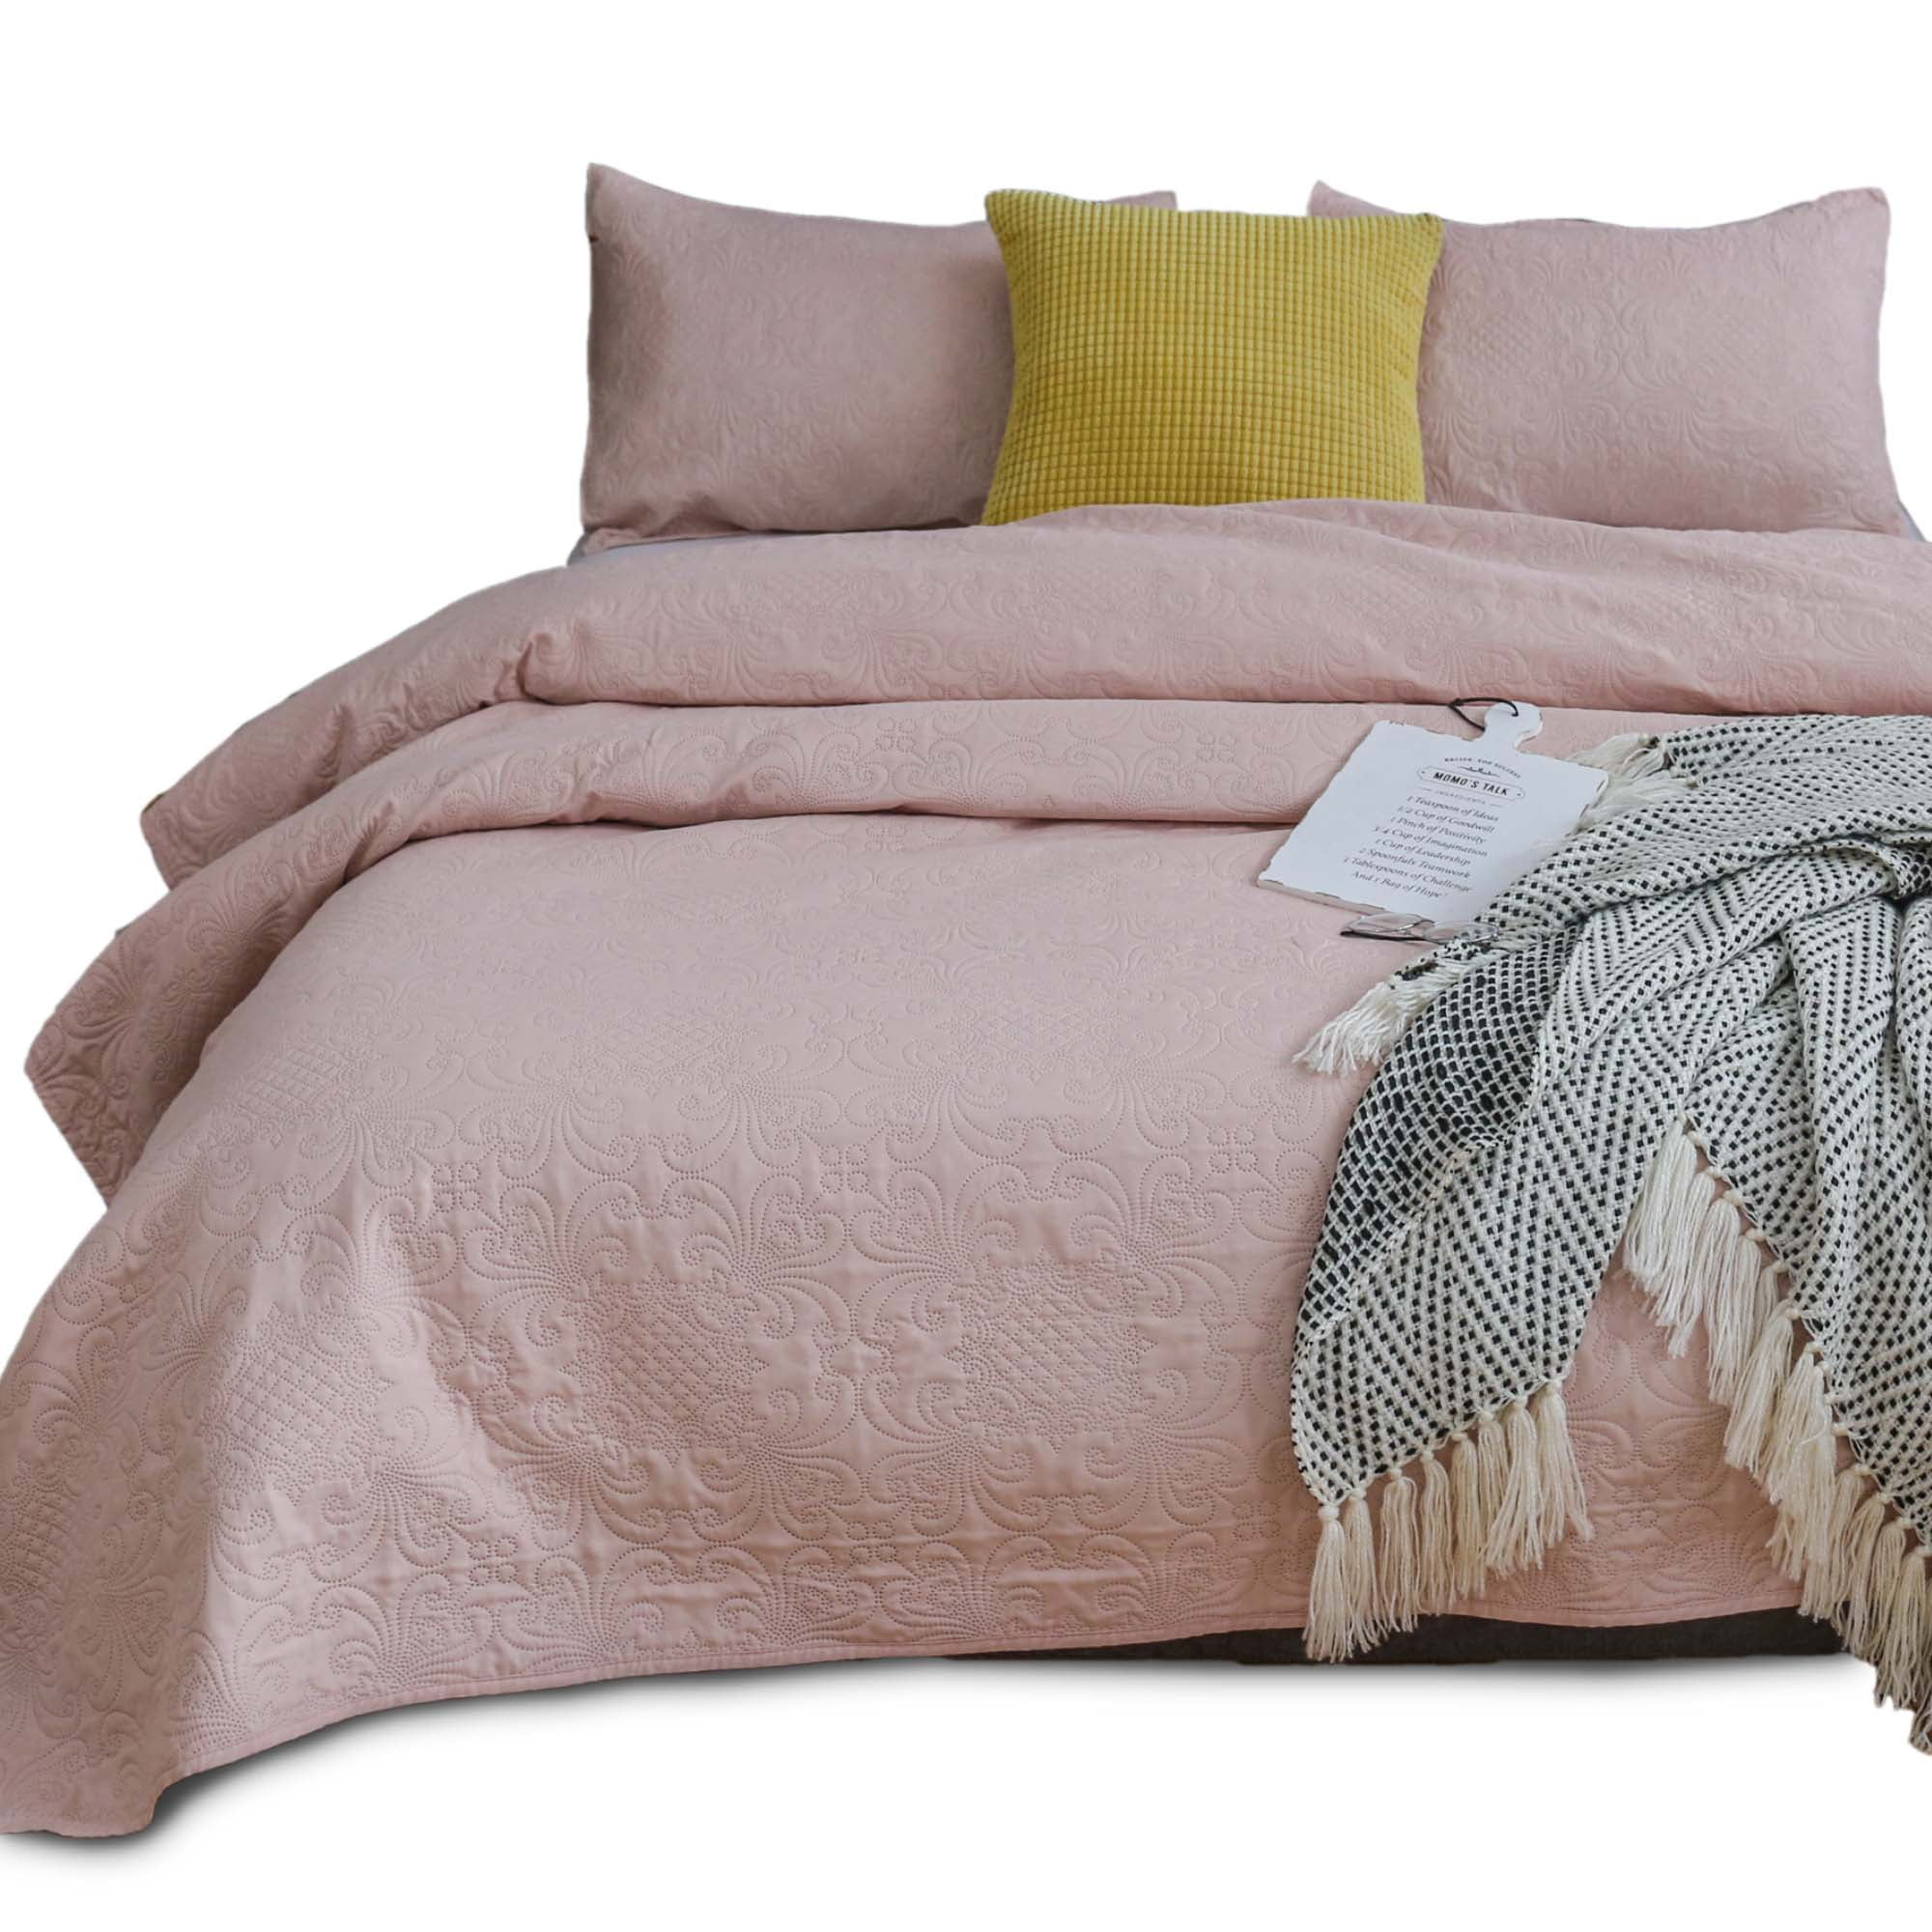 Details about   Nautica Santa Barbara Twin comforter sham set yellow pink stripes Cotton new 